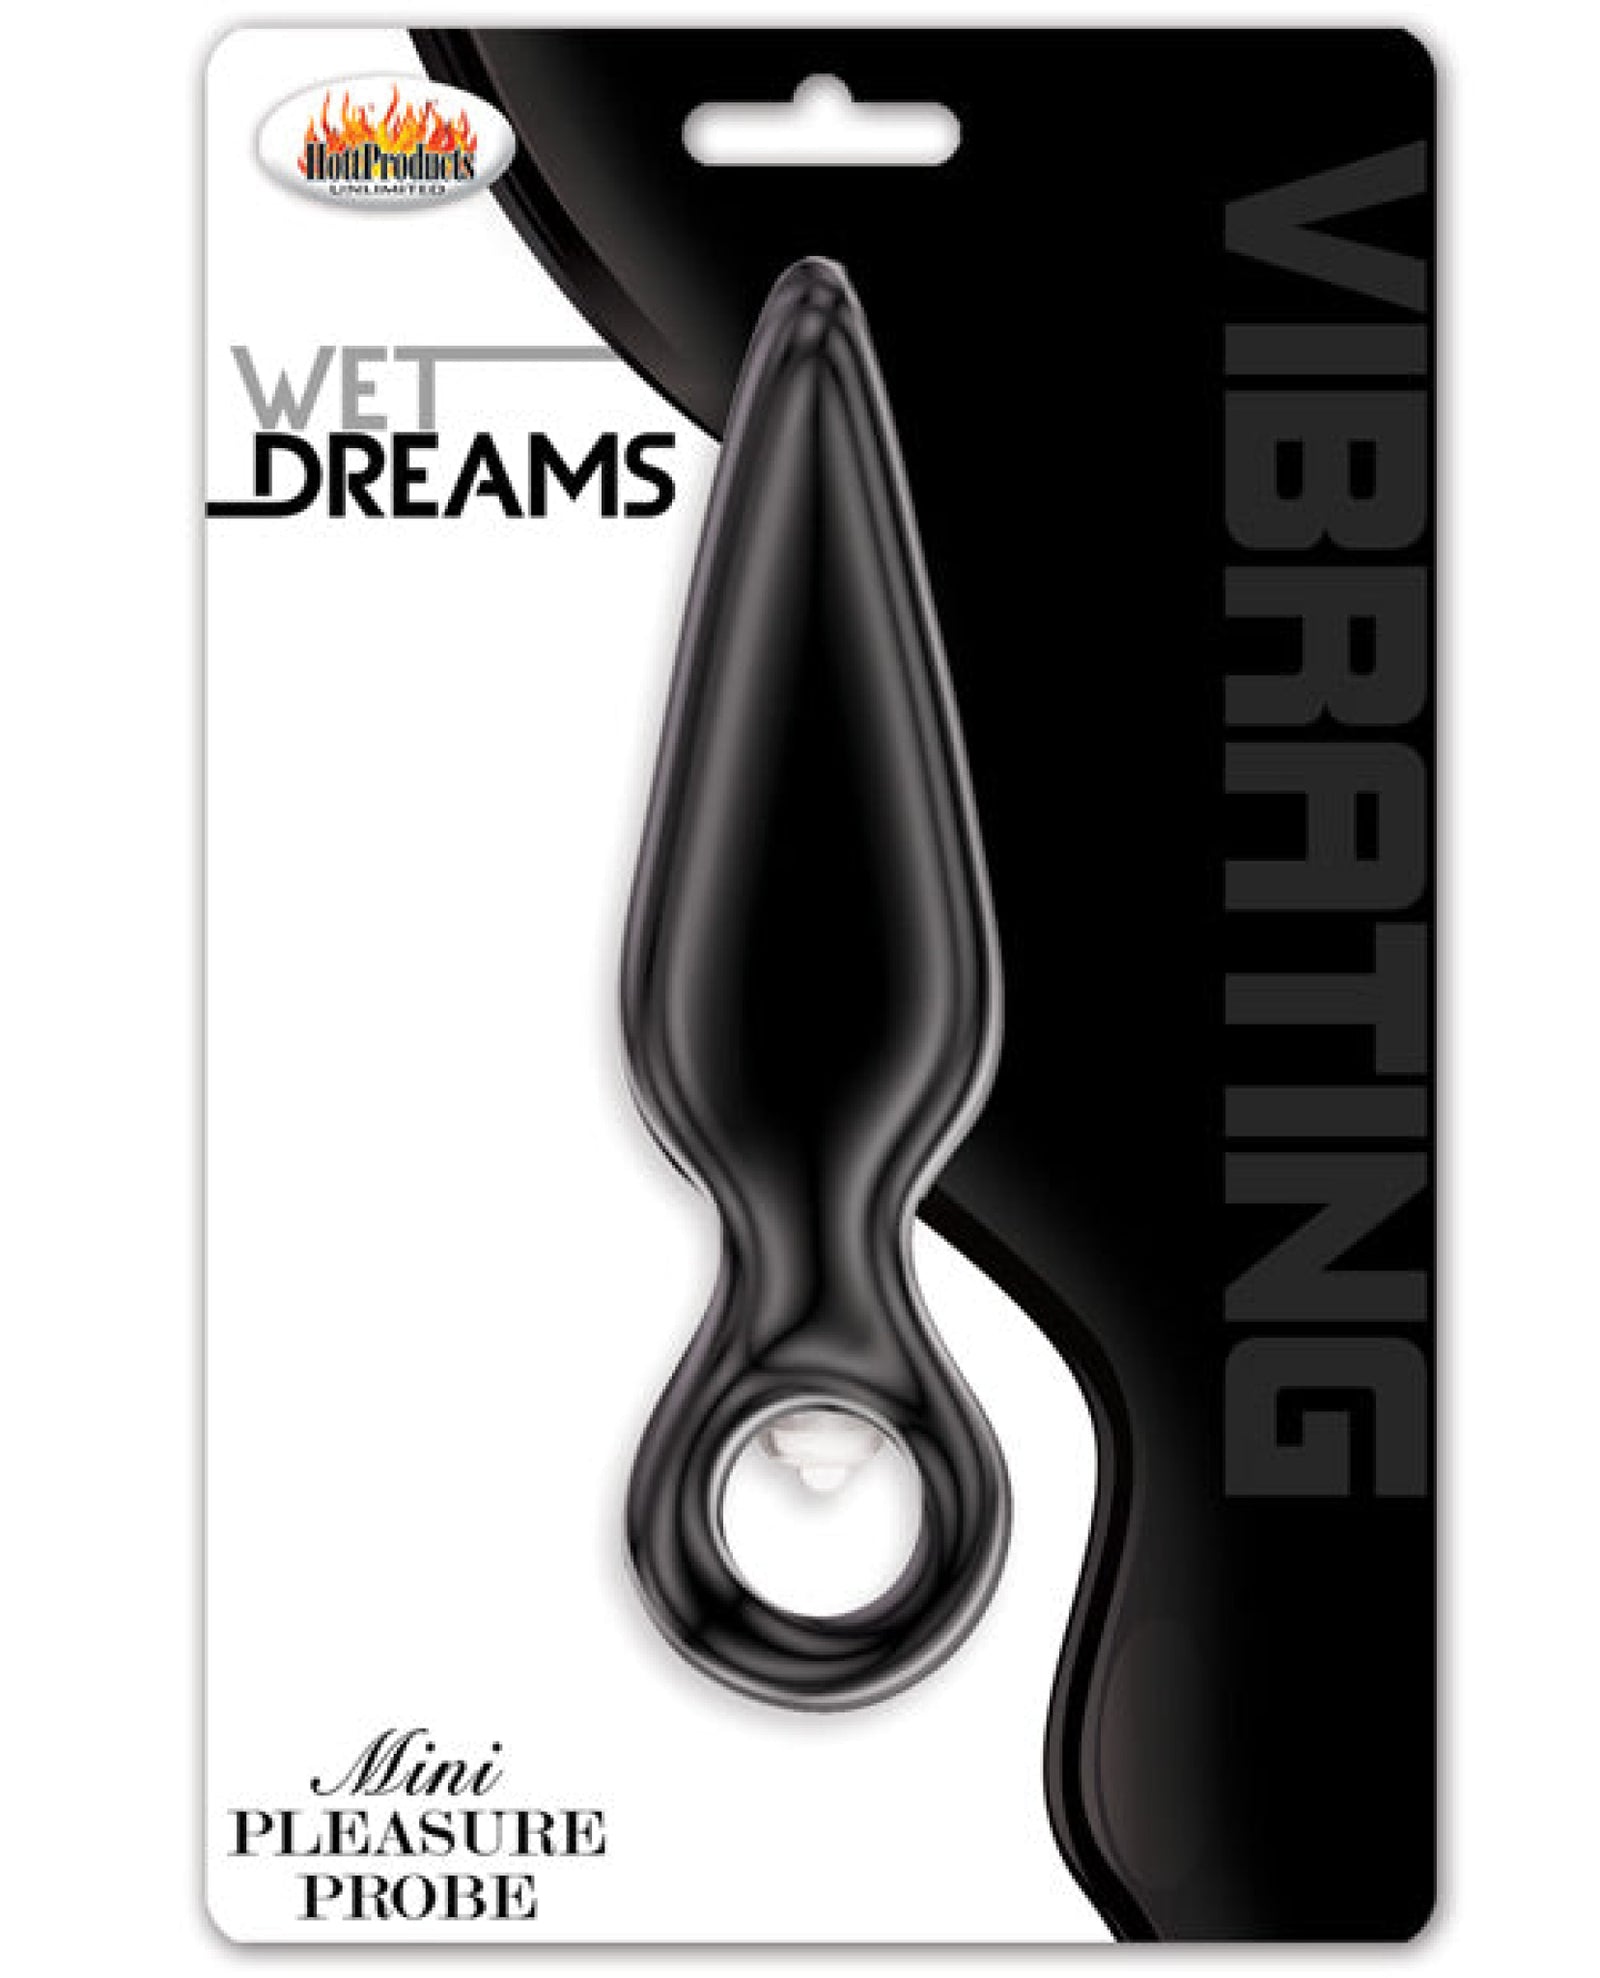 Wet Dreams Vibrating Mini Pleasure Probe - Black Hott Products